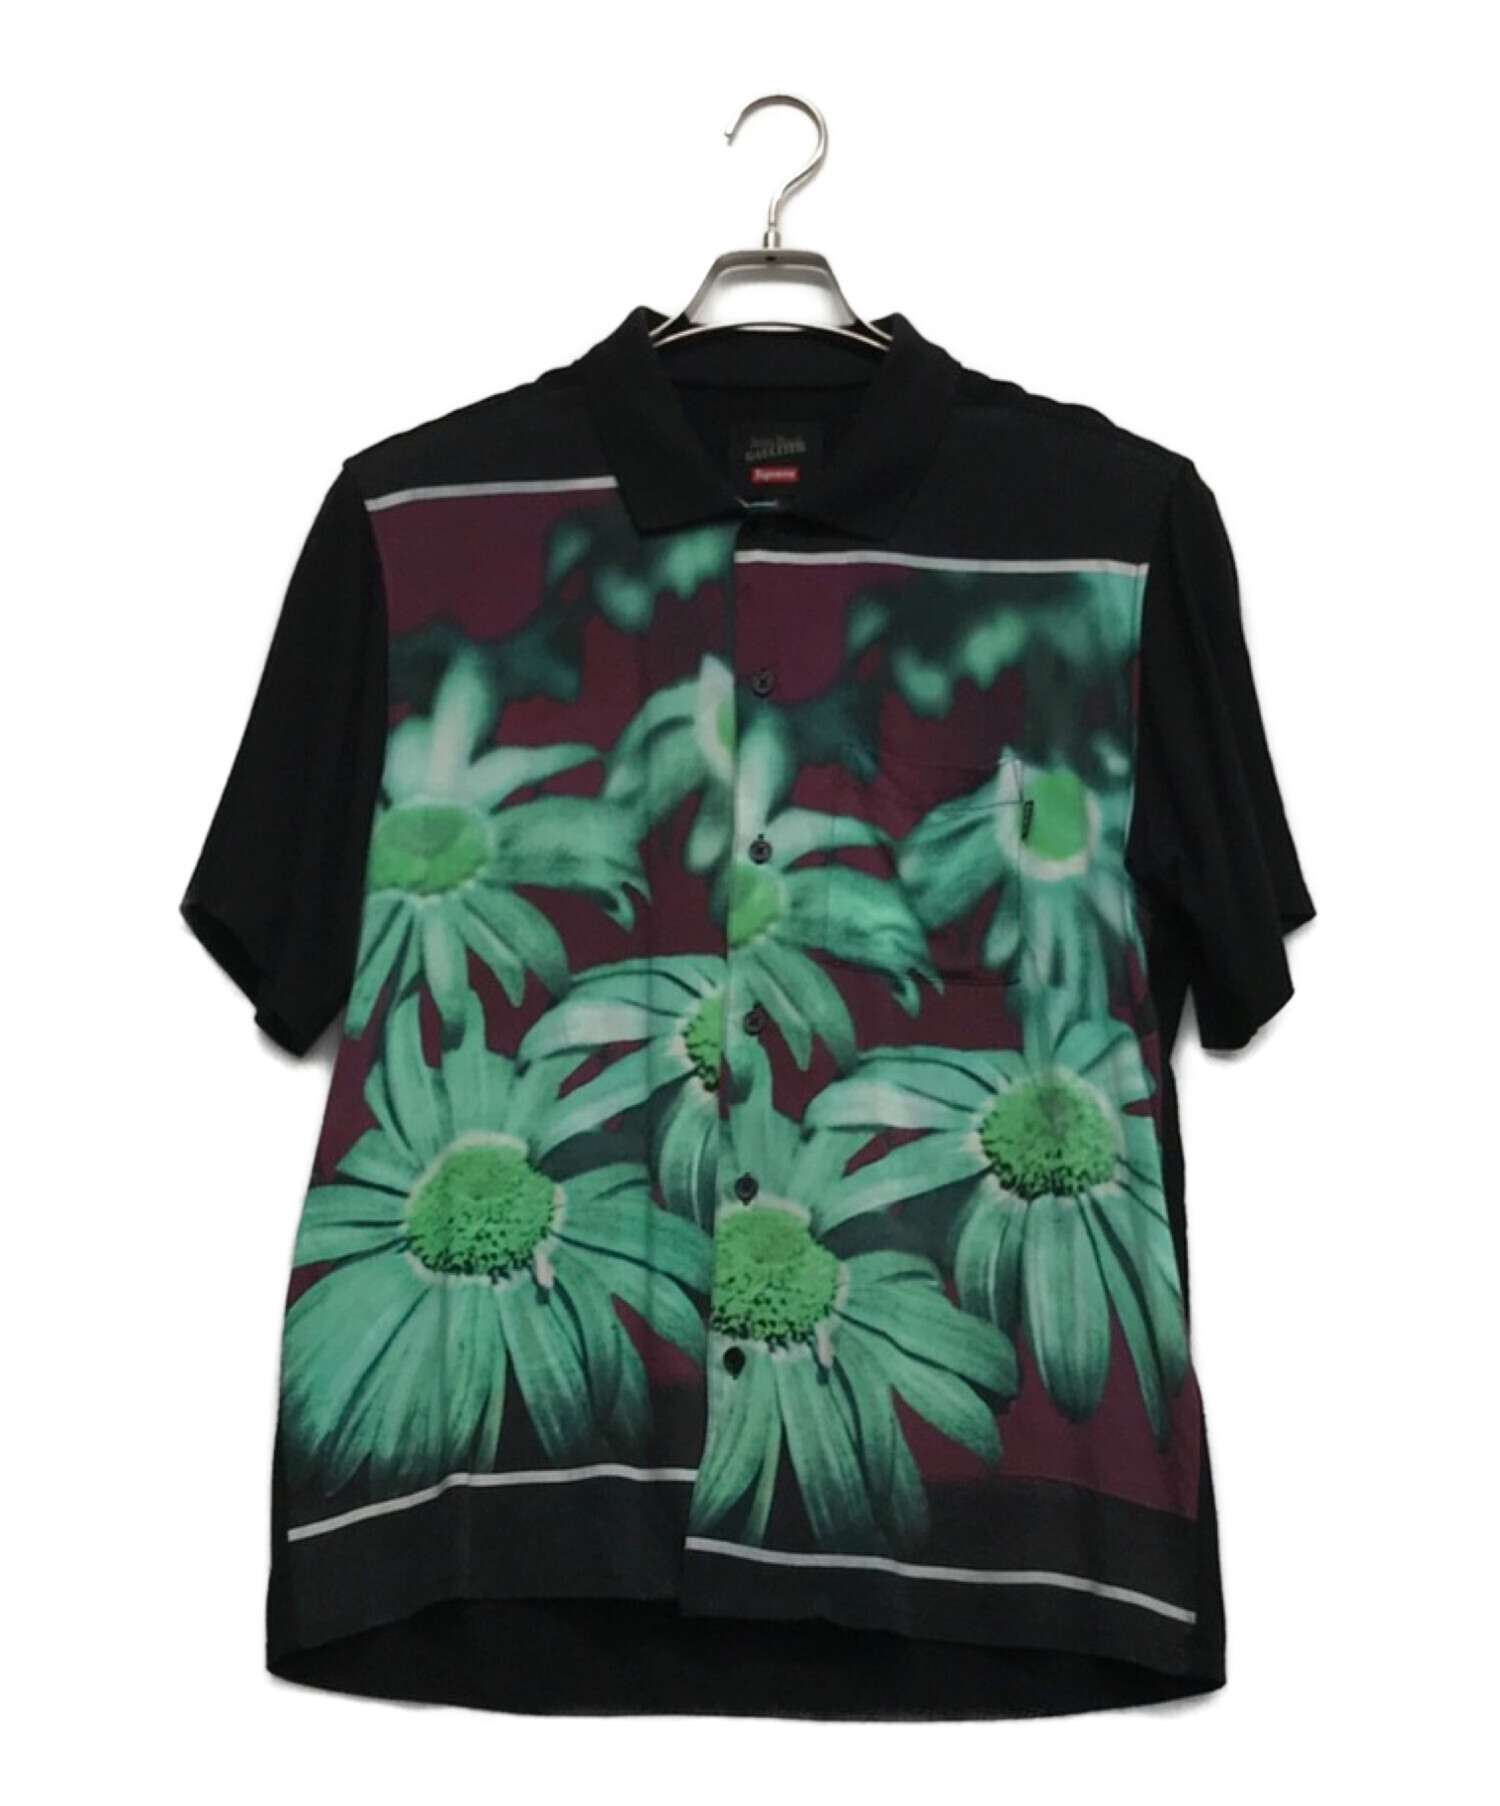 Supreme×Jean Paul Gaultier 2019SS Flower Power Rayon Shirt シュプリーム×ジャンポールゴルチエ フラワーパワーレーヨンシャツ 半袖オープンカラー花柄シャツ ブラック サイズL【200618】【-A】【me04】